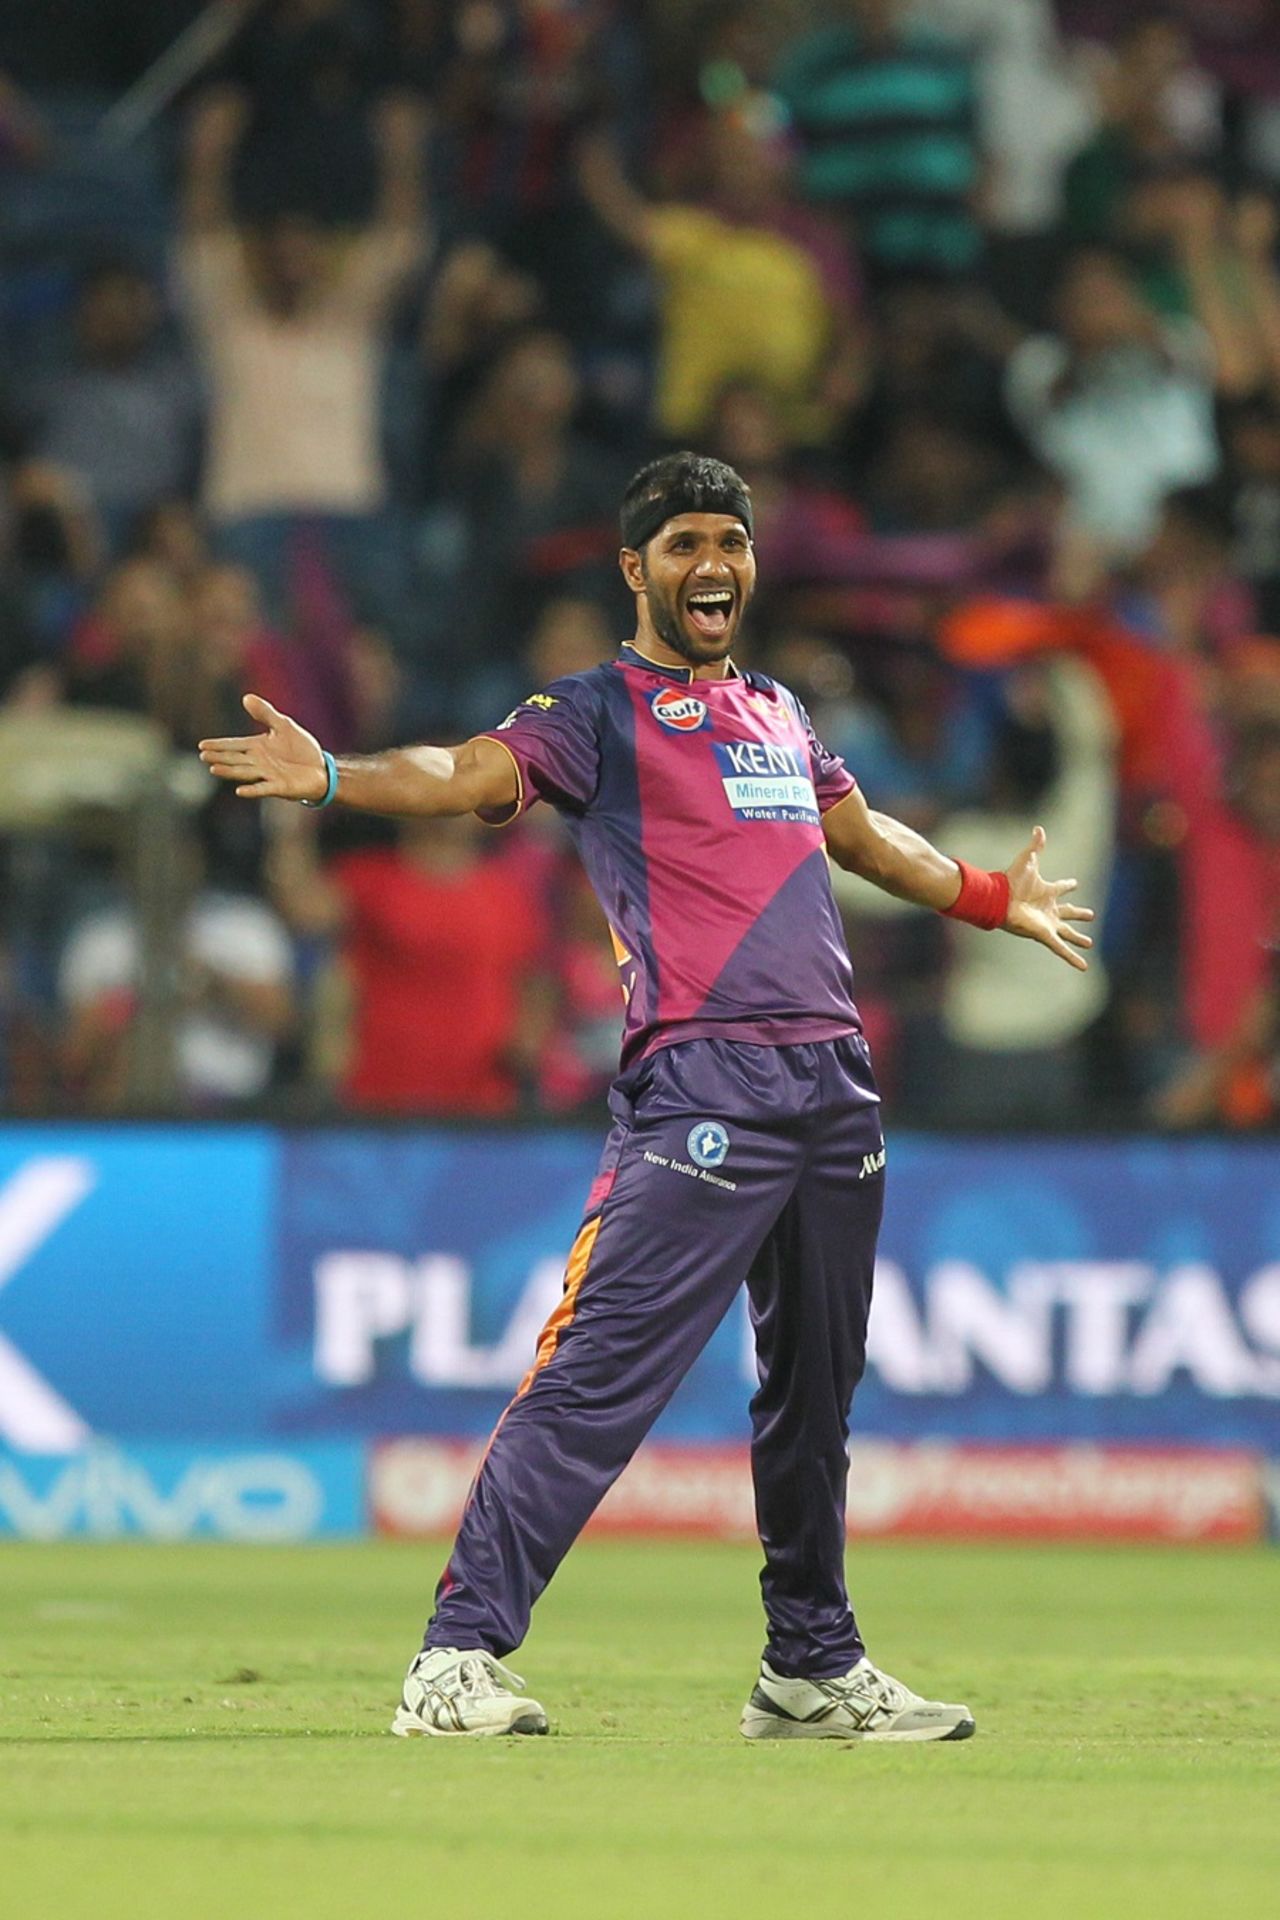 Ashok Dinda celebrates after picking up a wicket, Rising Pune Supergiants v Gujarat Lions, IPL 2016, Pune, April 29, 2016